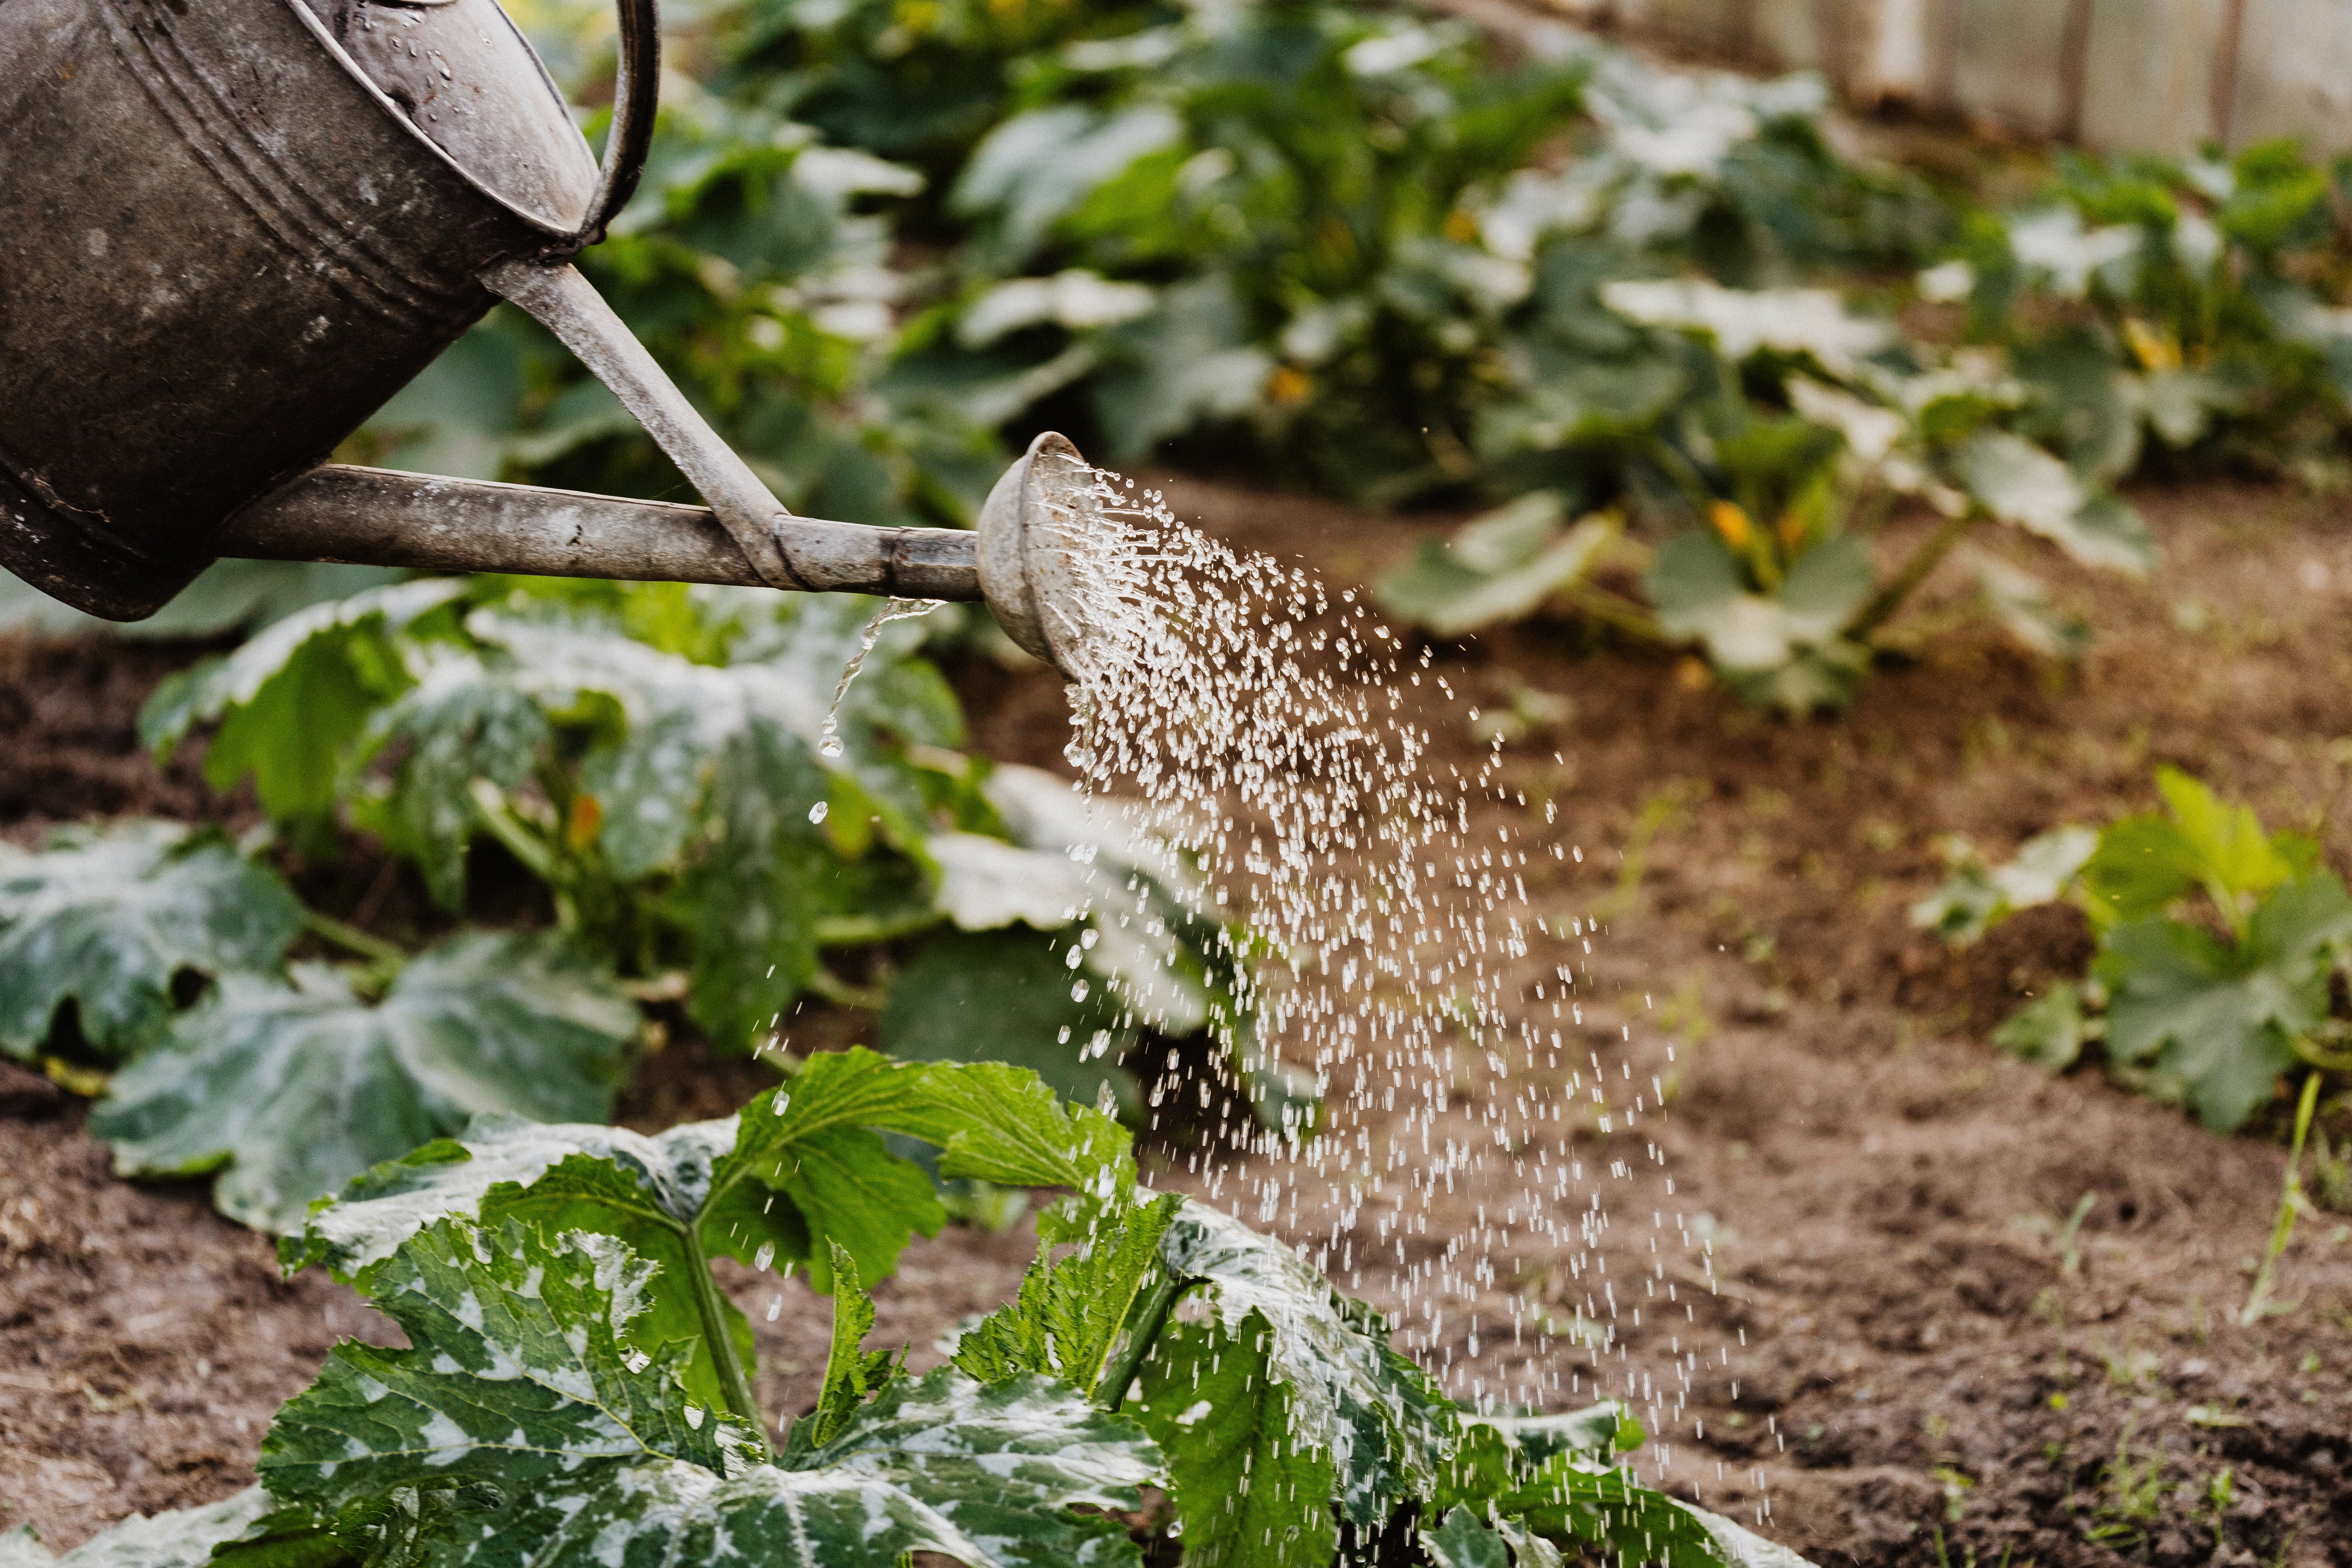 Watering crops practising sustainable gardening methods